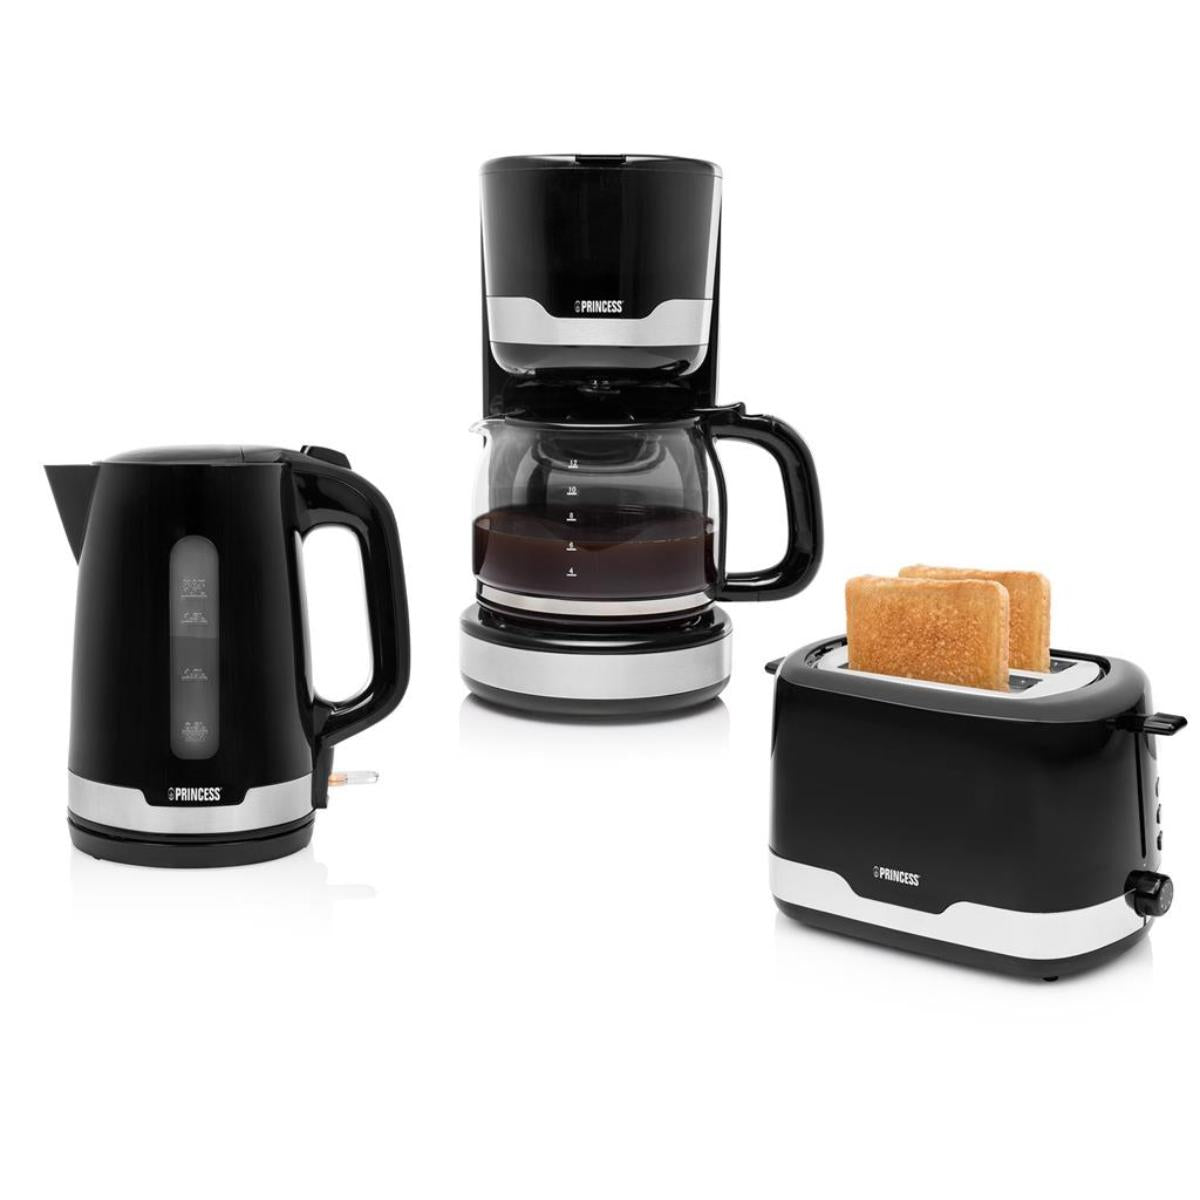 Princess Breakfast Set Toaster & Kettle, Stainless Steel & Coffee Maker